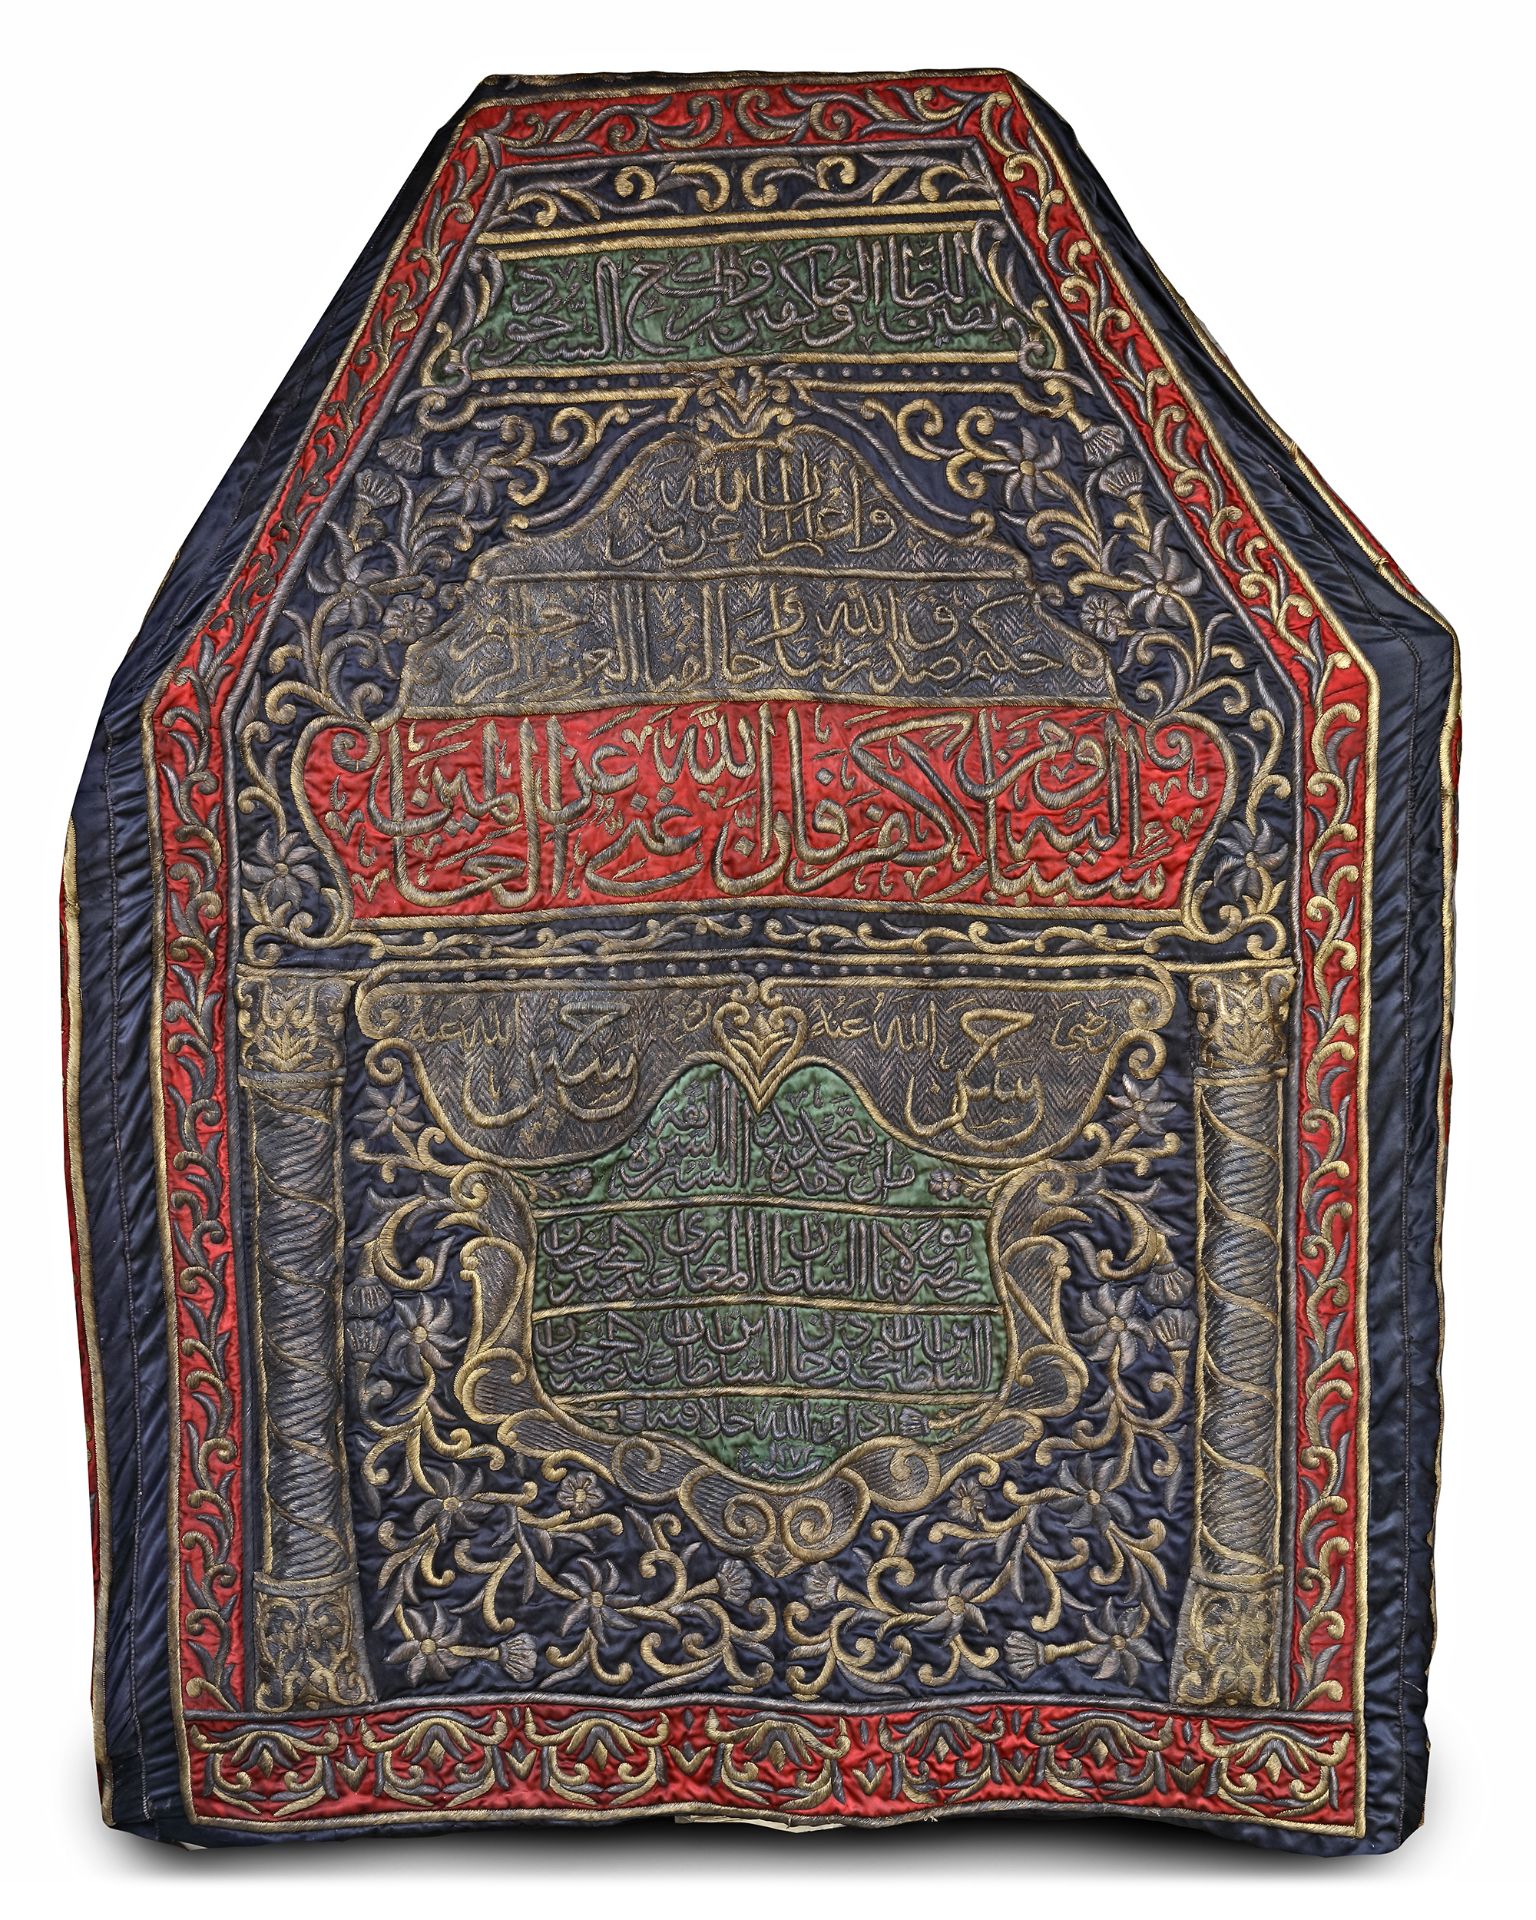 AN OTTOMAN METAL-THREAD EMBROIDERED MAQAM IBRAHIM COVER, 1272 AH/1855 AD - Image 3 of 6